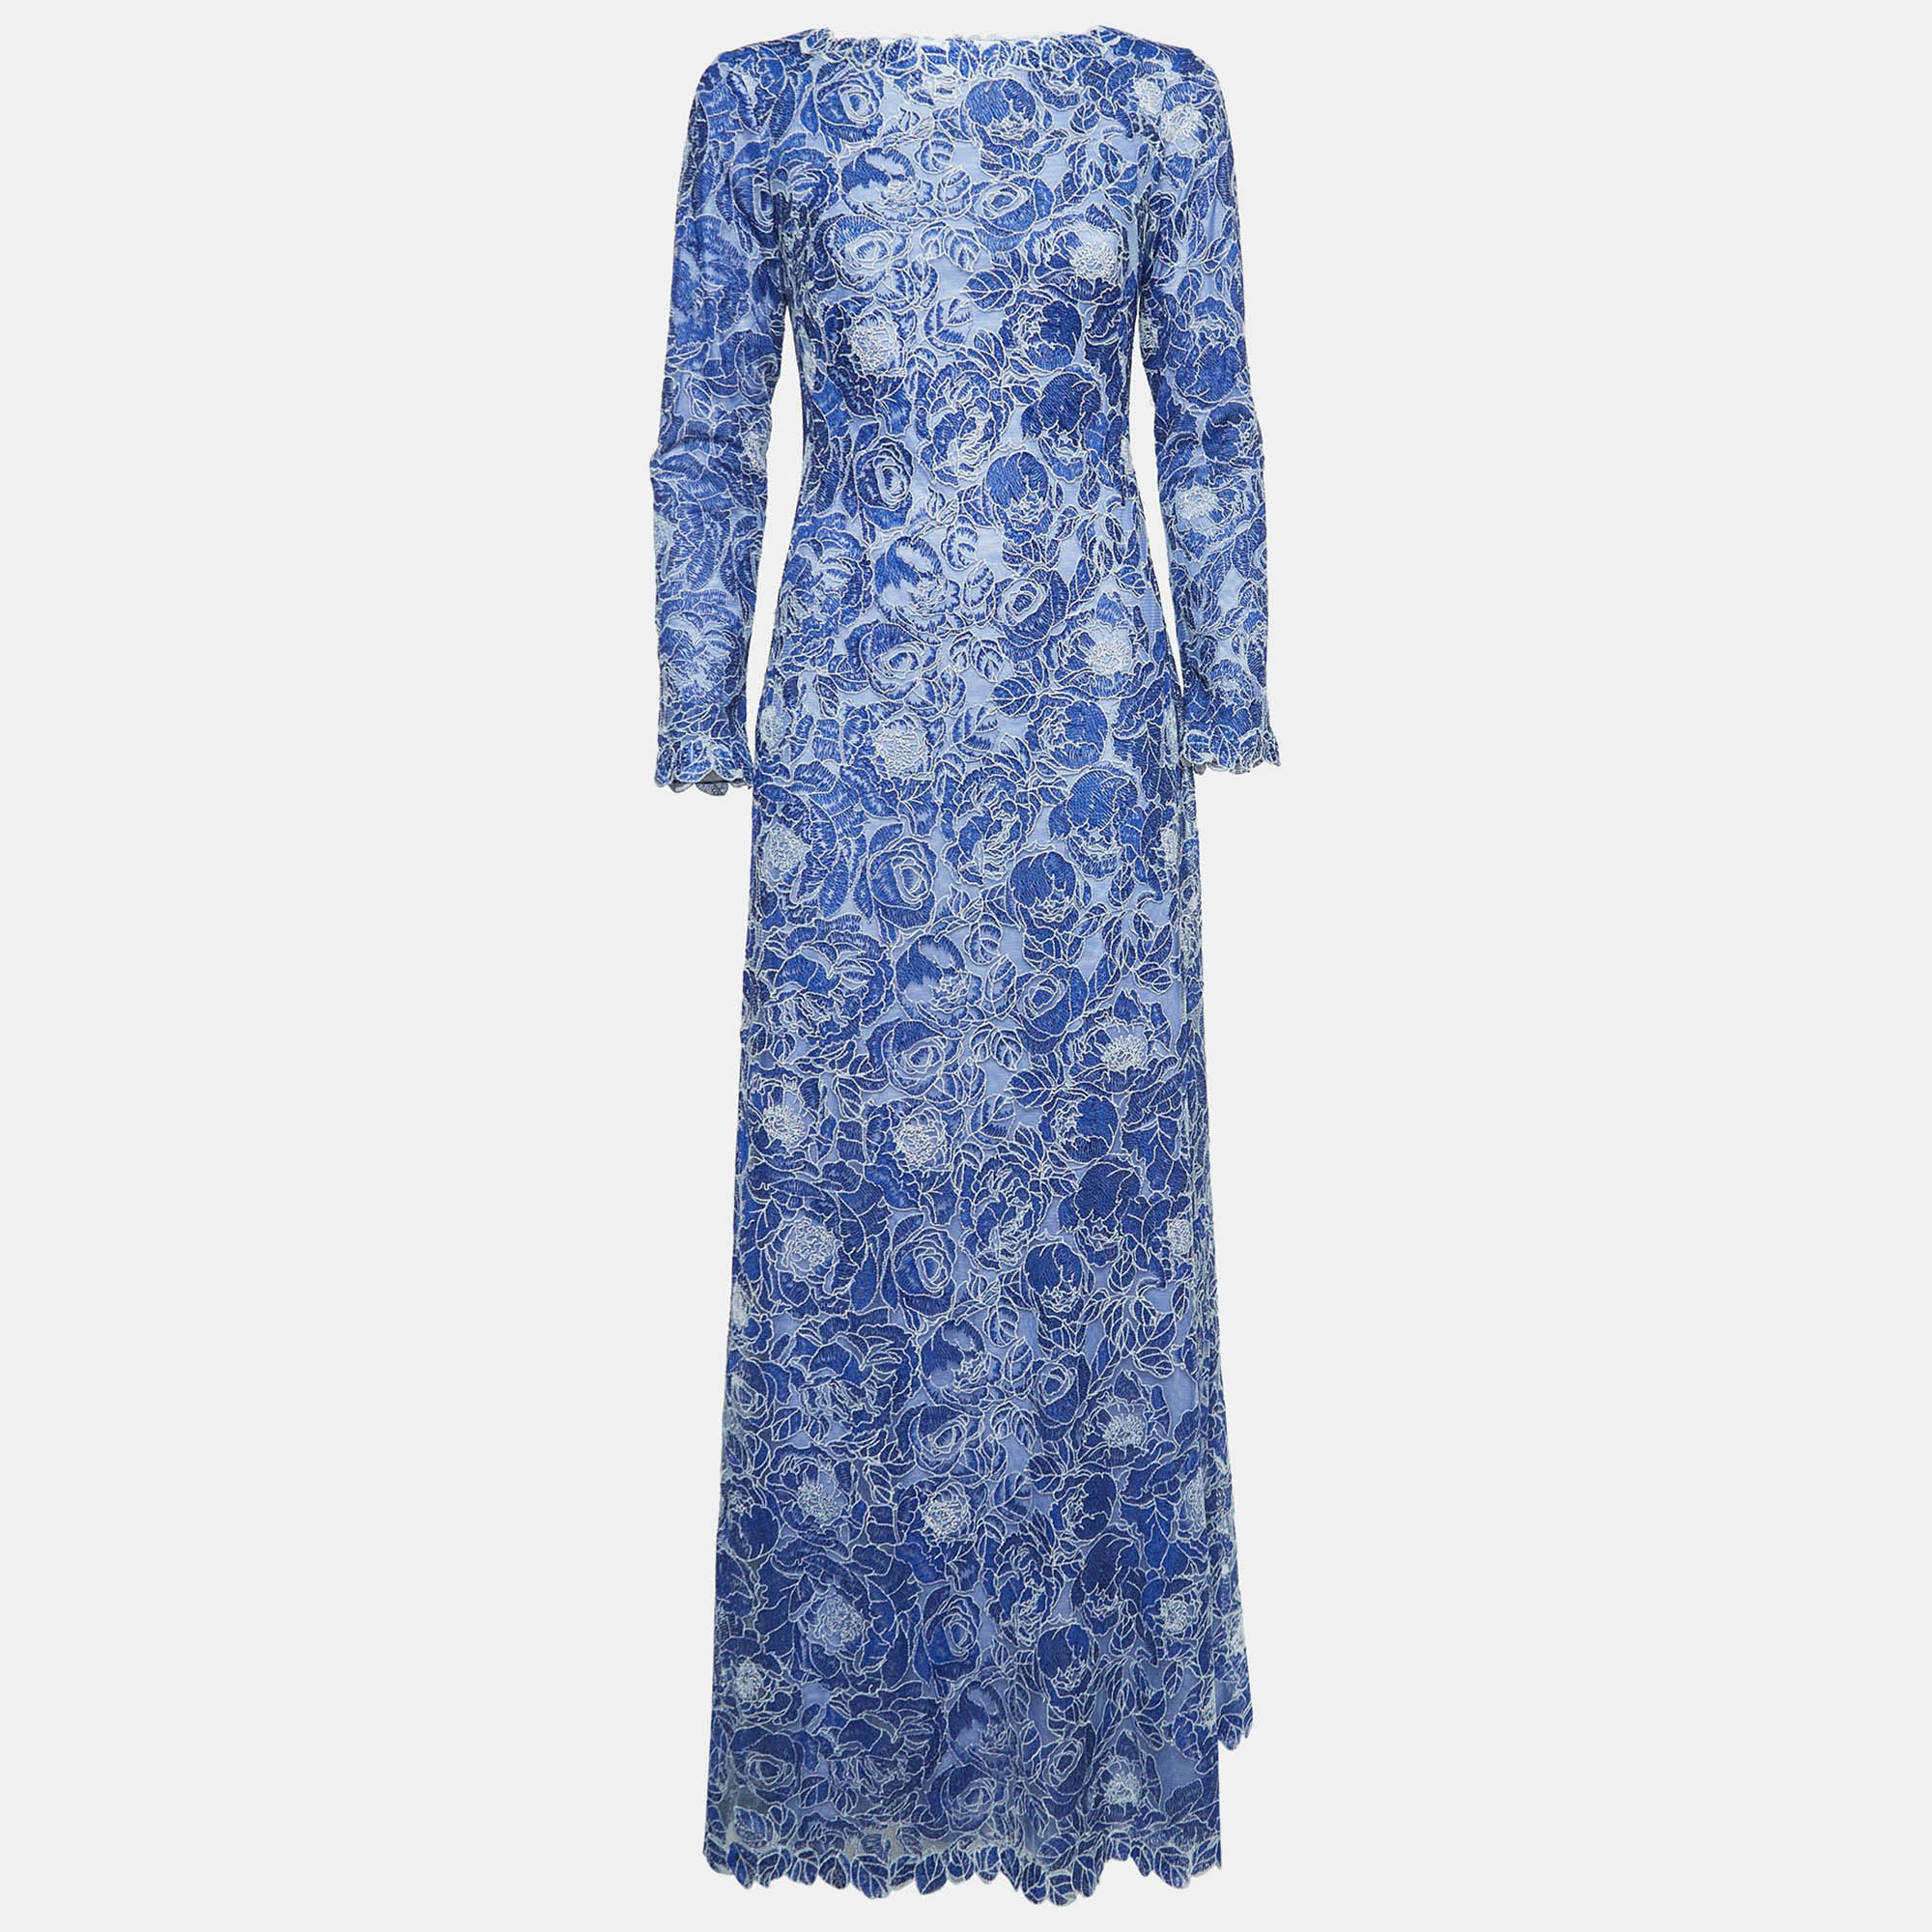 Tadashi shoji blue floral pattern lace long sleeve maxi dress s